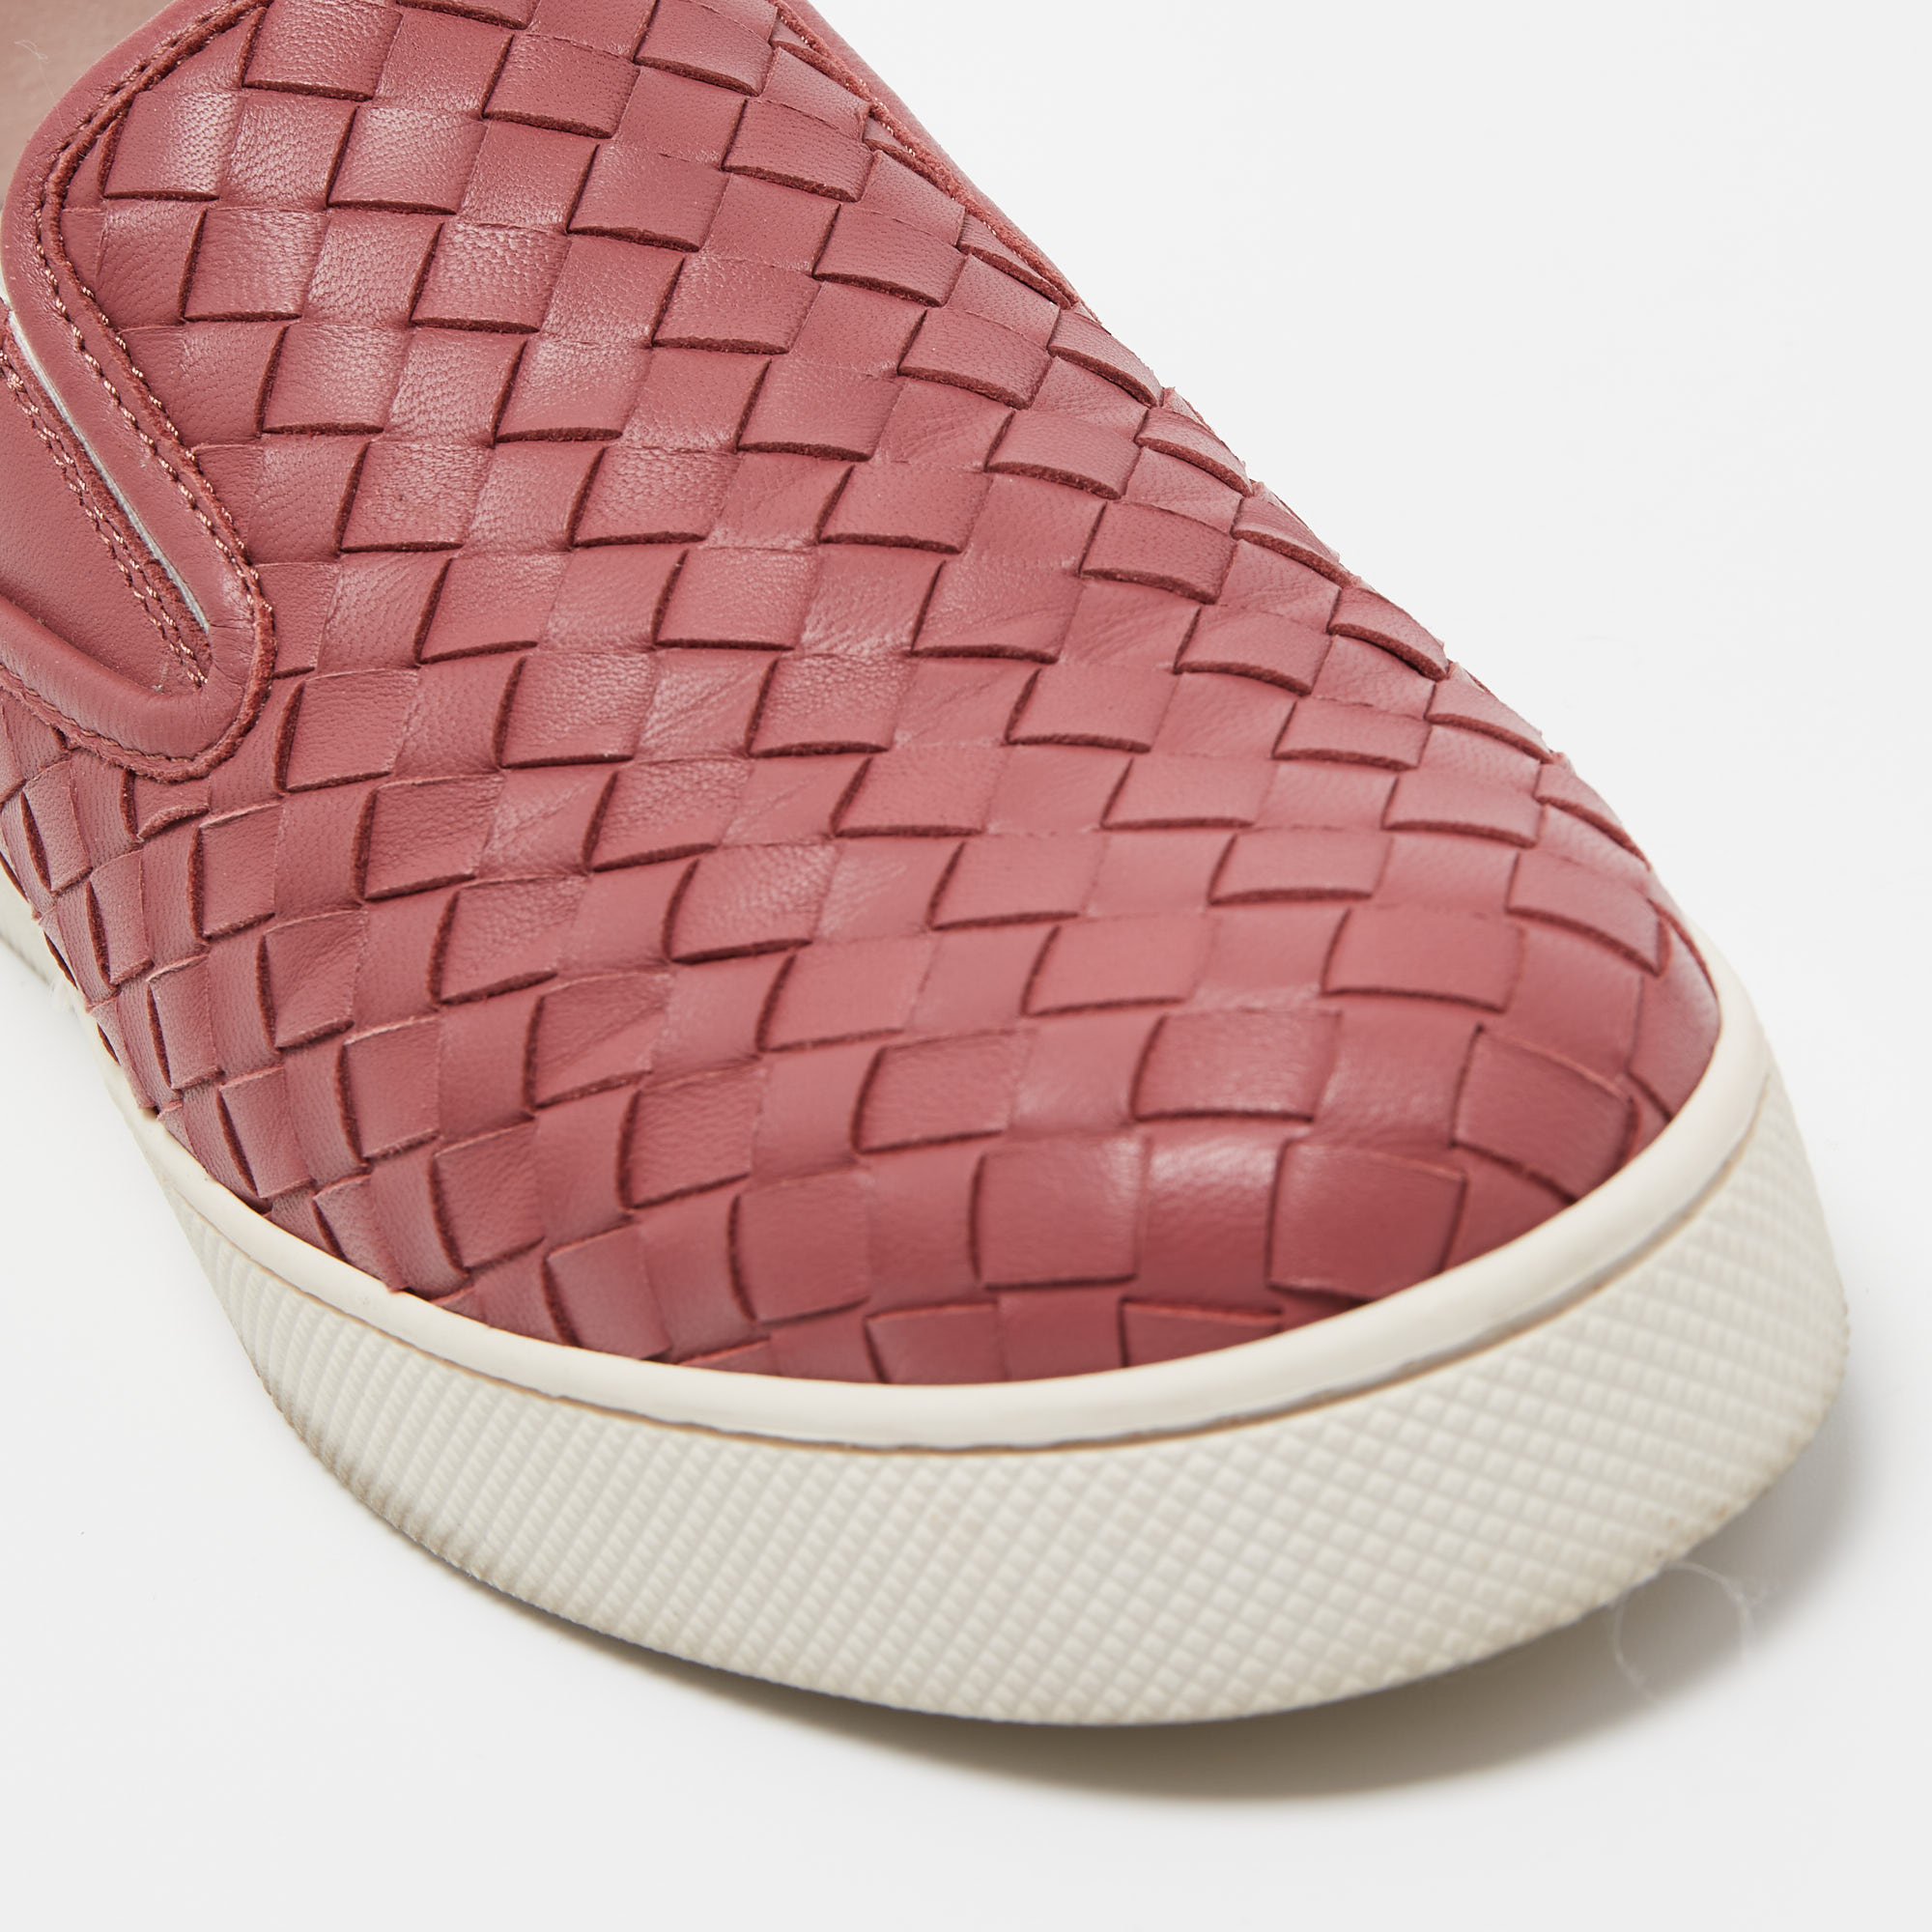 Bottega Veneta Pink Intrecciato Leather Slip On Sneakers Size 38